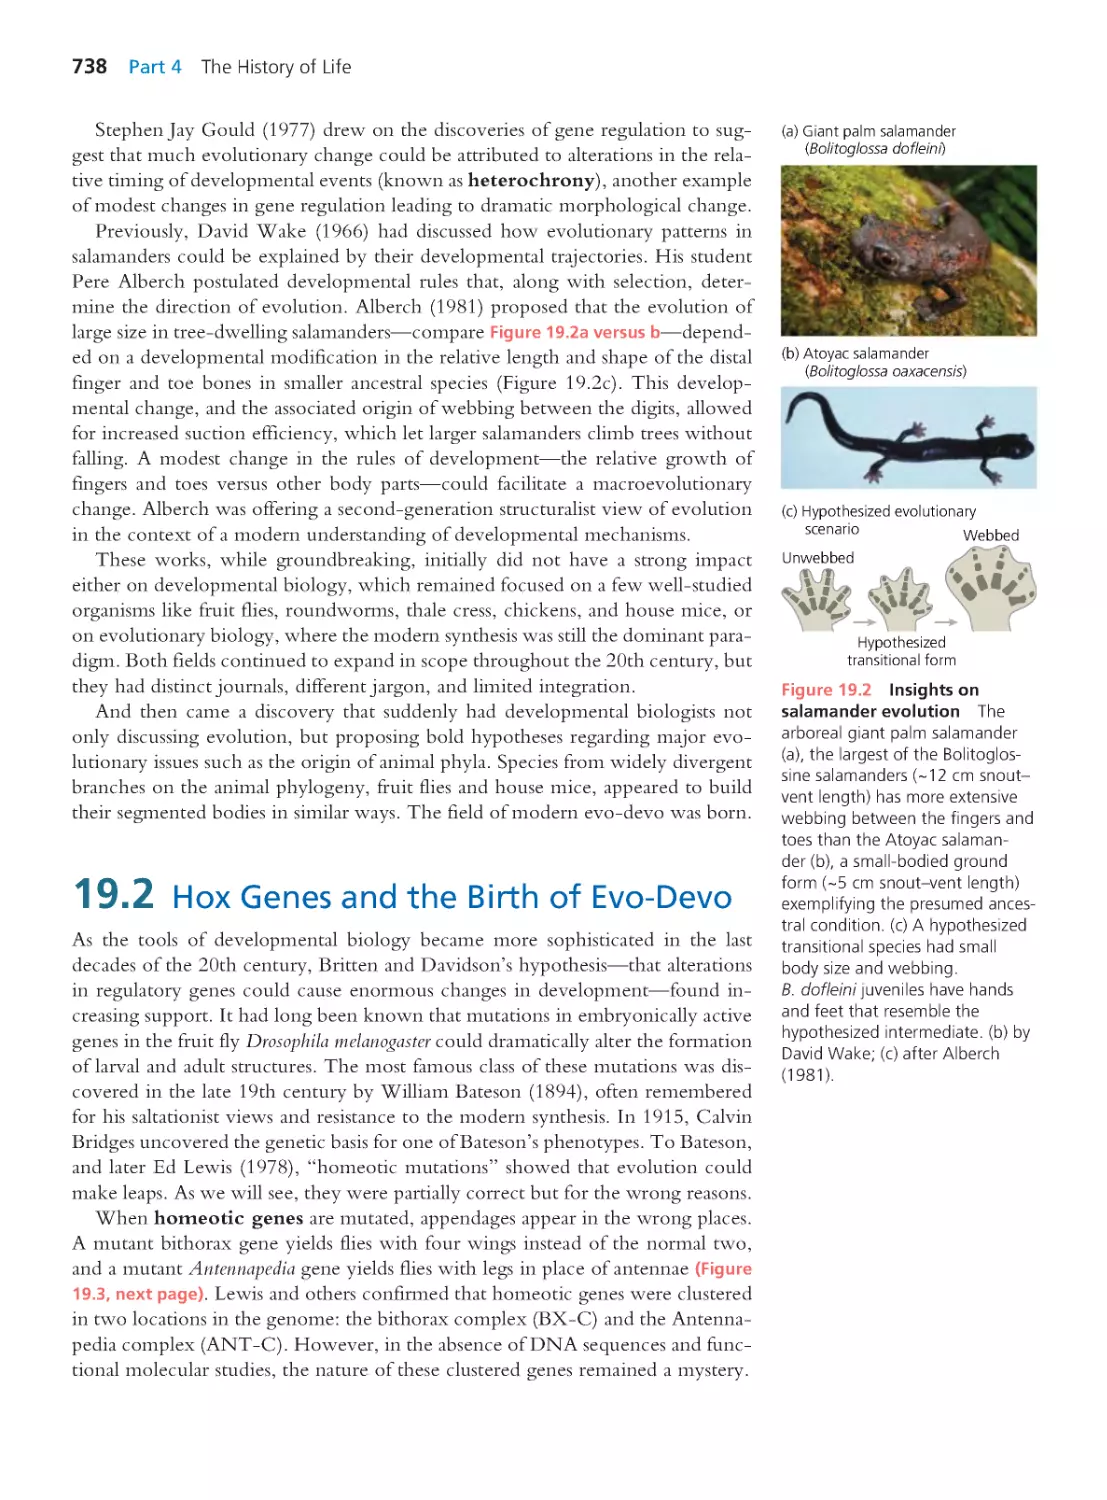 19.2 Hox Genes and the Birth of Evo-Devo